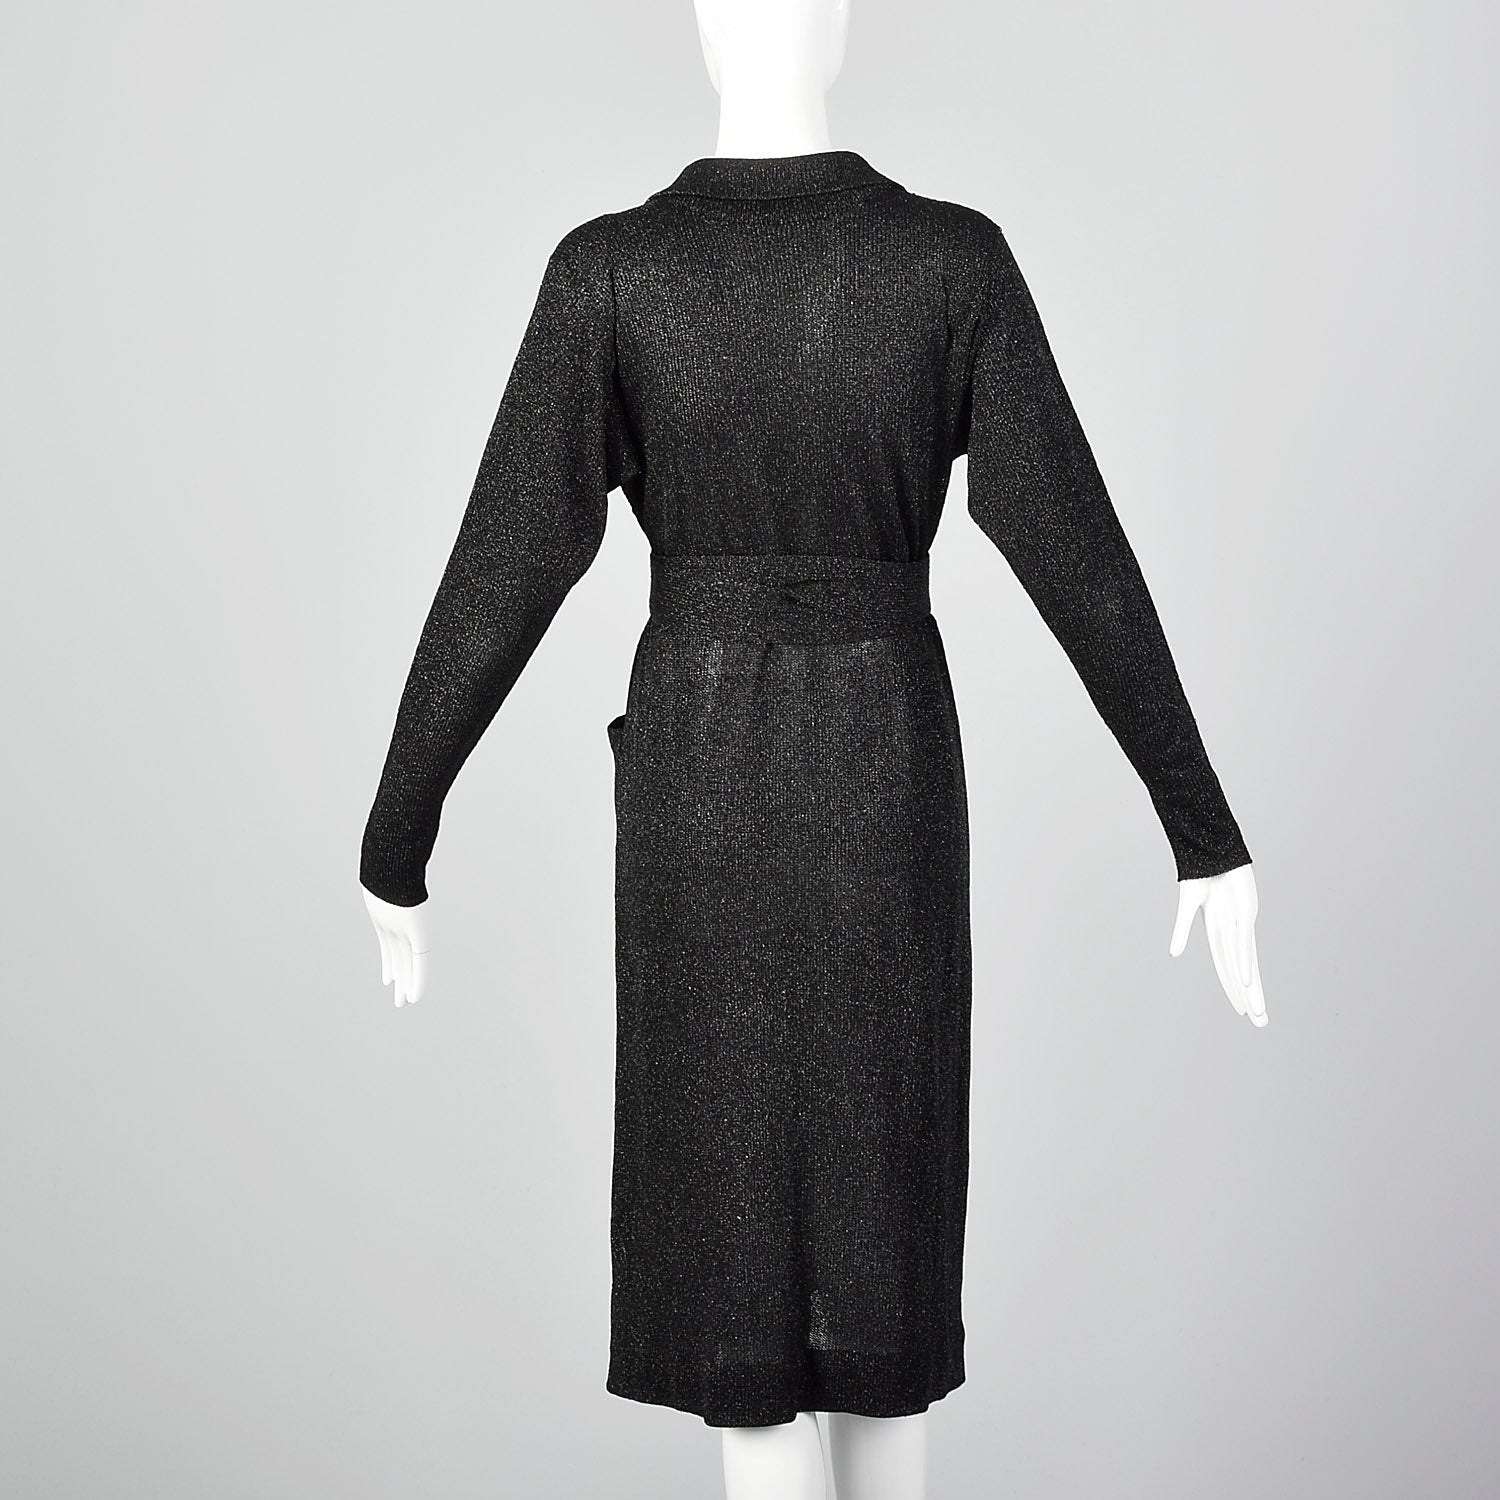 Large 1970s Black & Style Knit – Dress Salvage Lurex